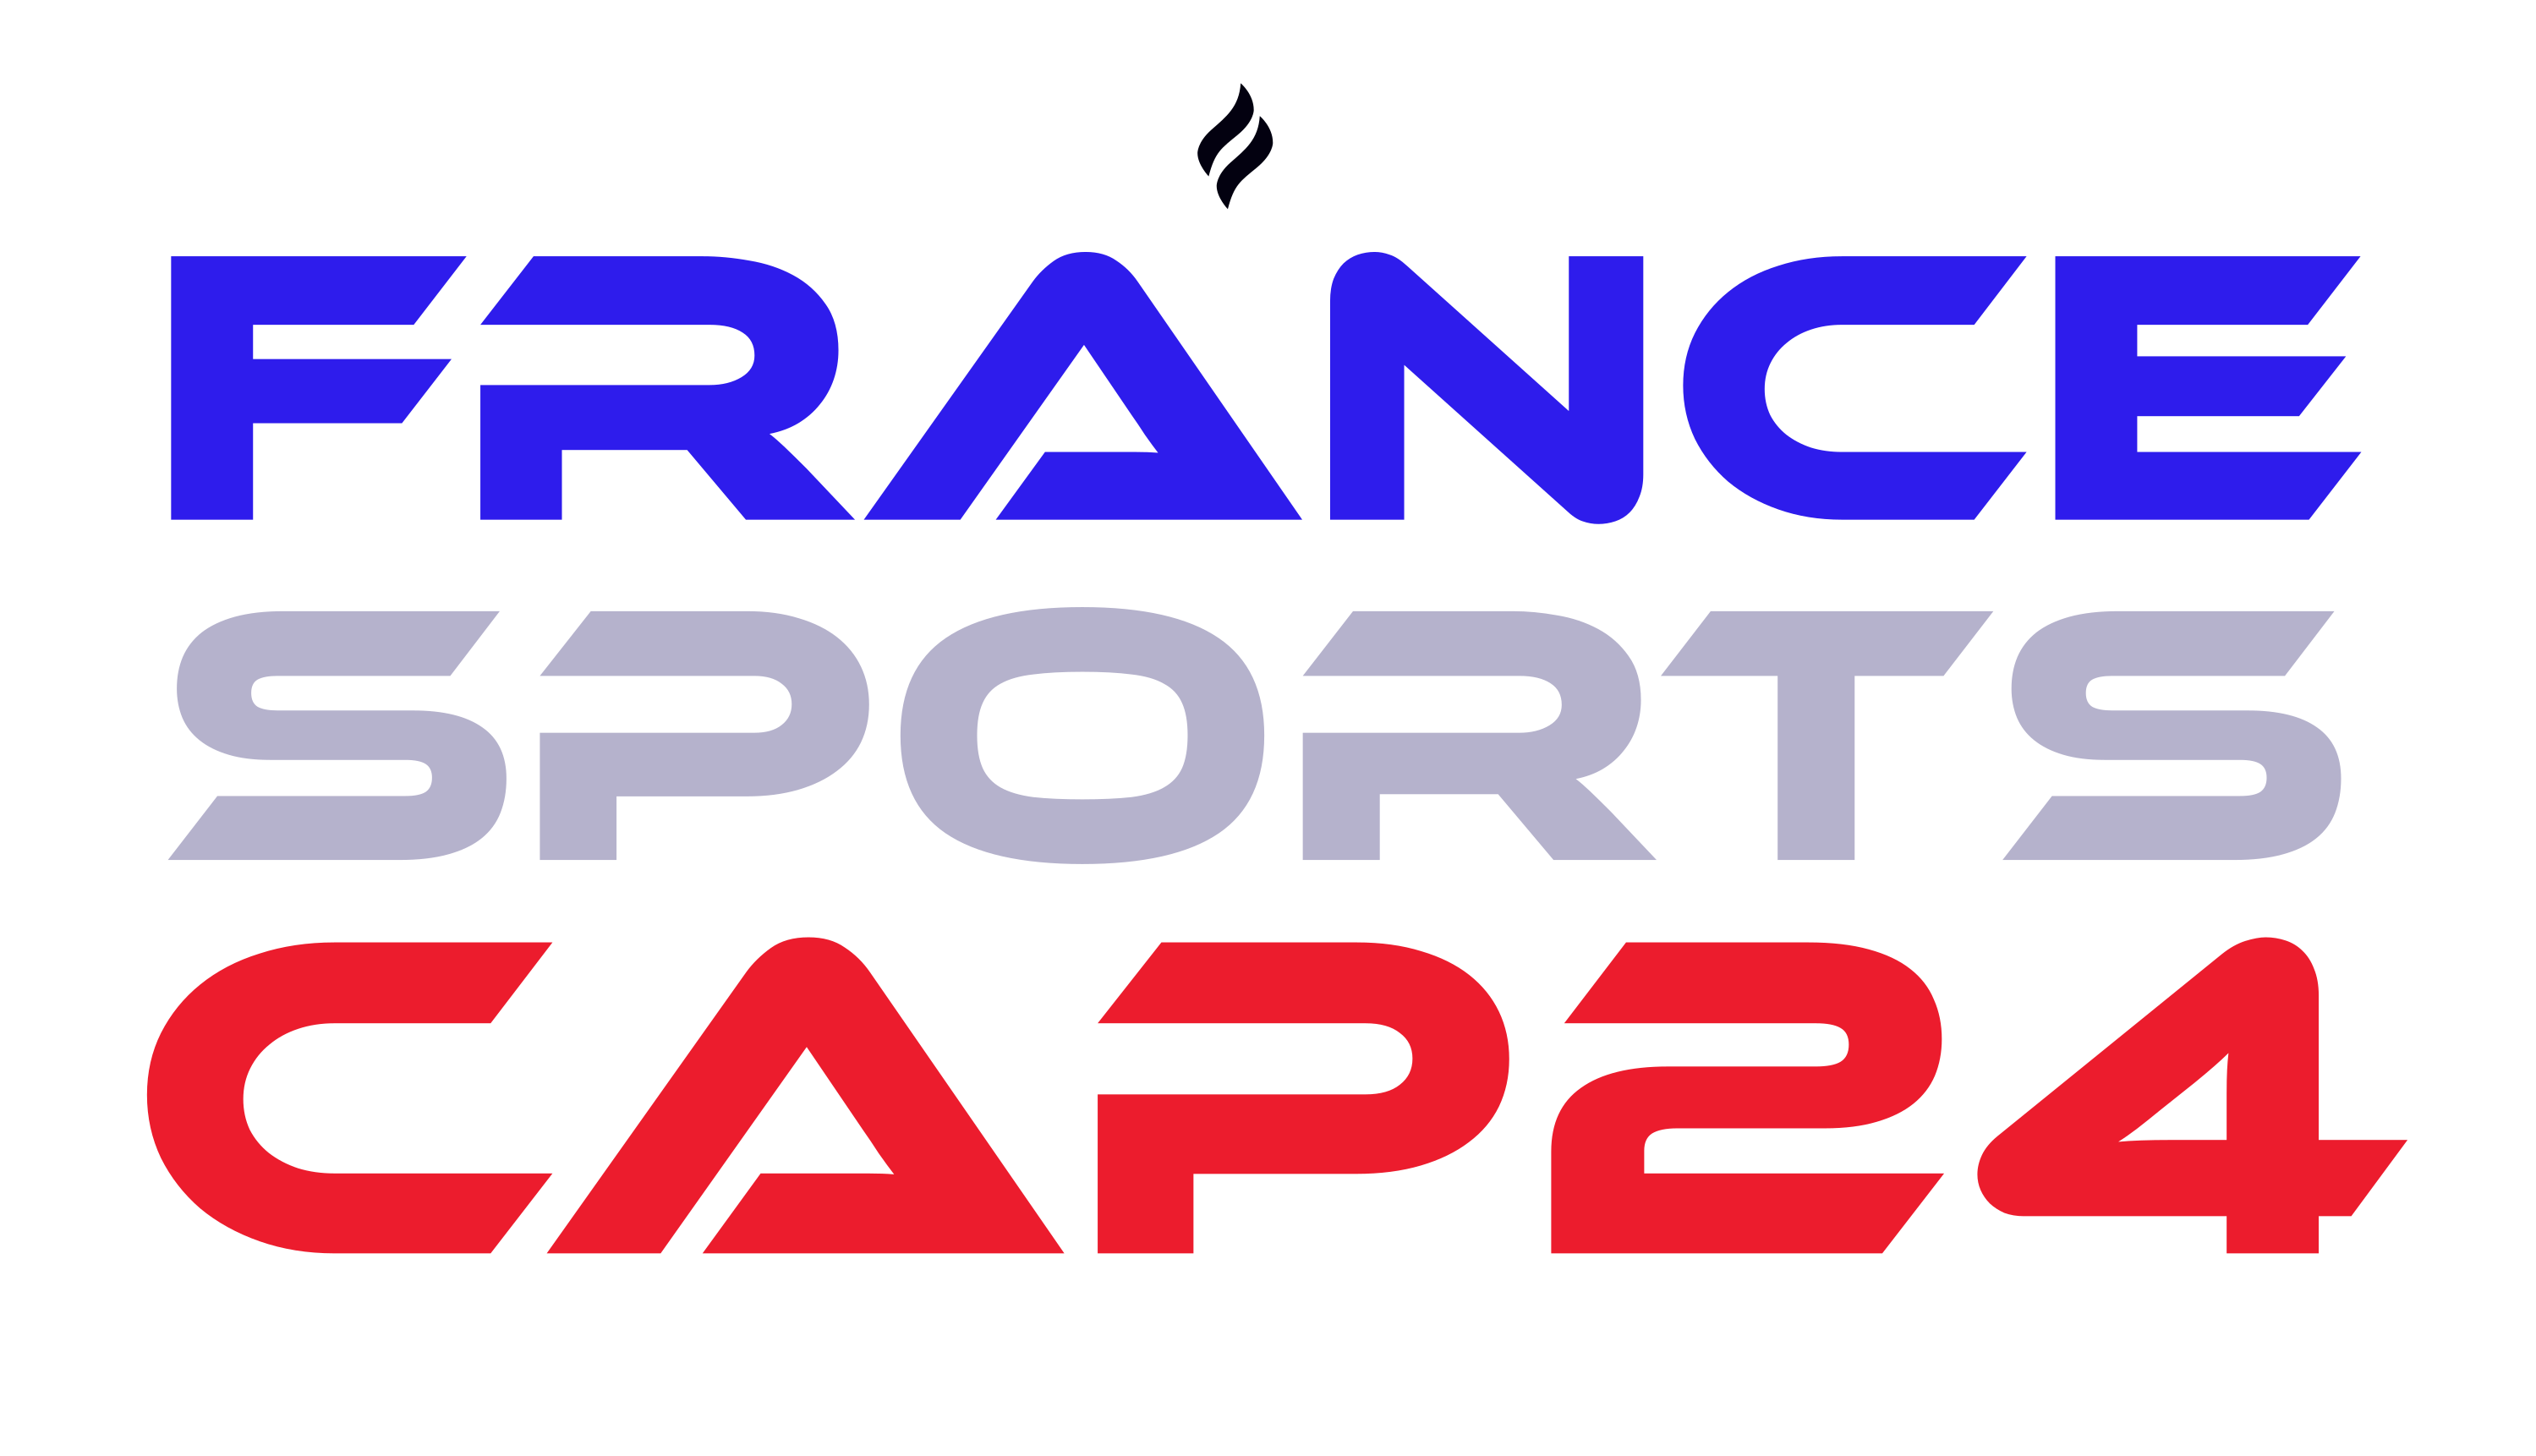 FRANCE SPORTS CAP24